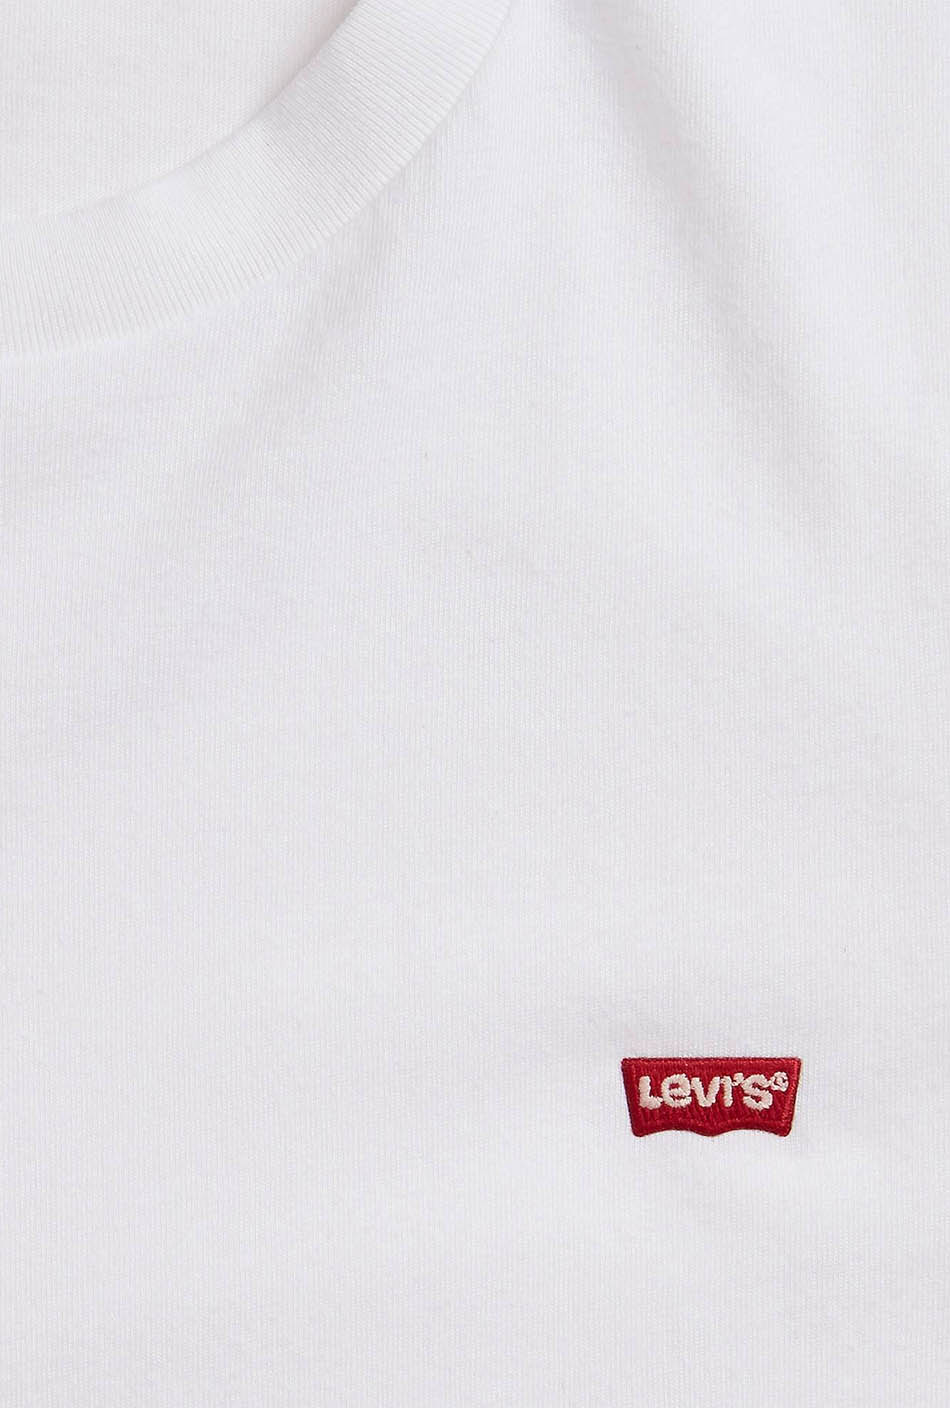 Levi's Original Patch White t-shirt